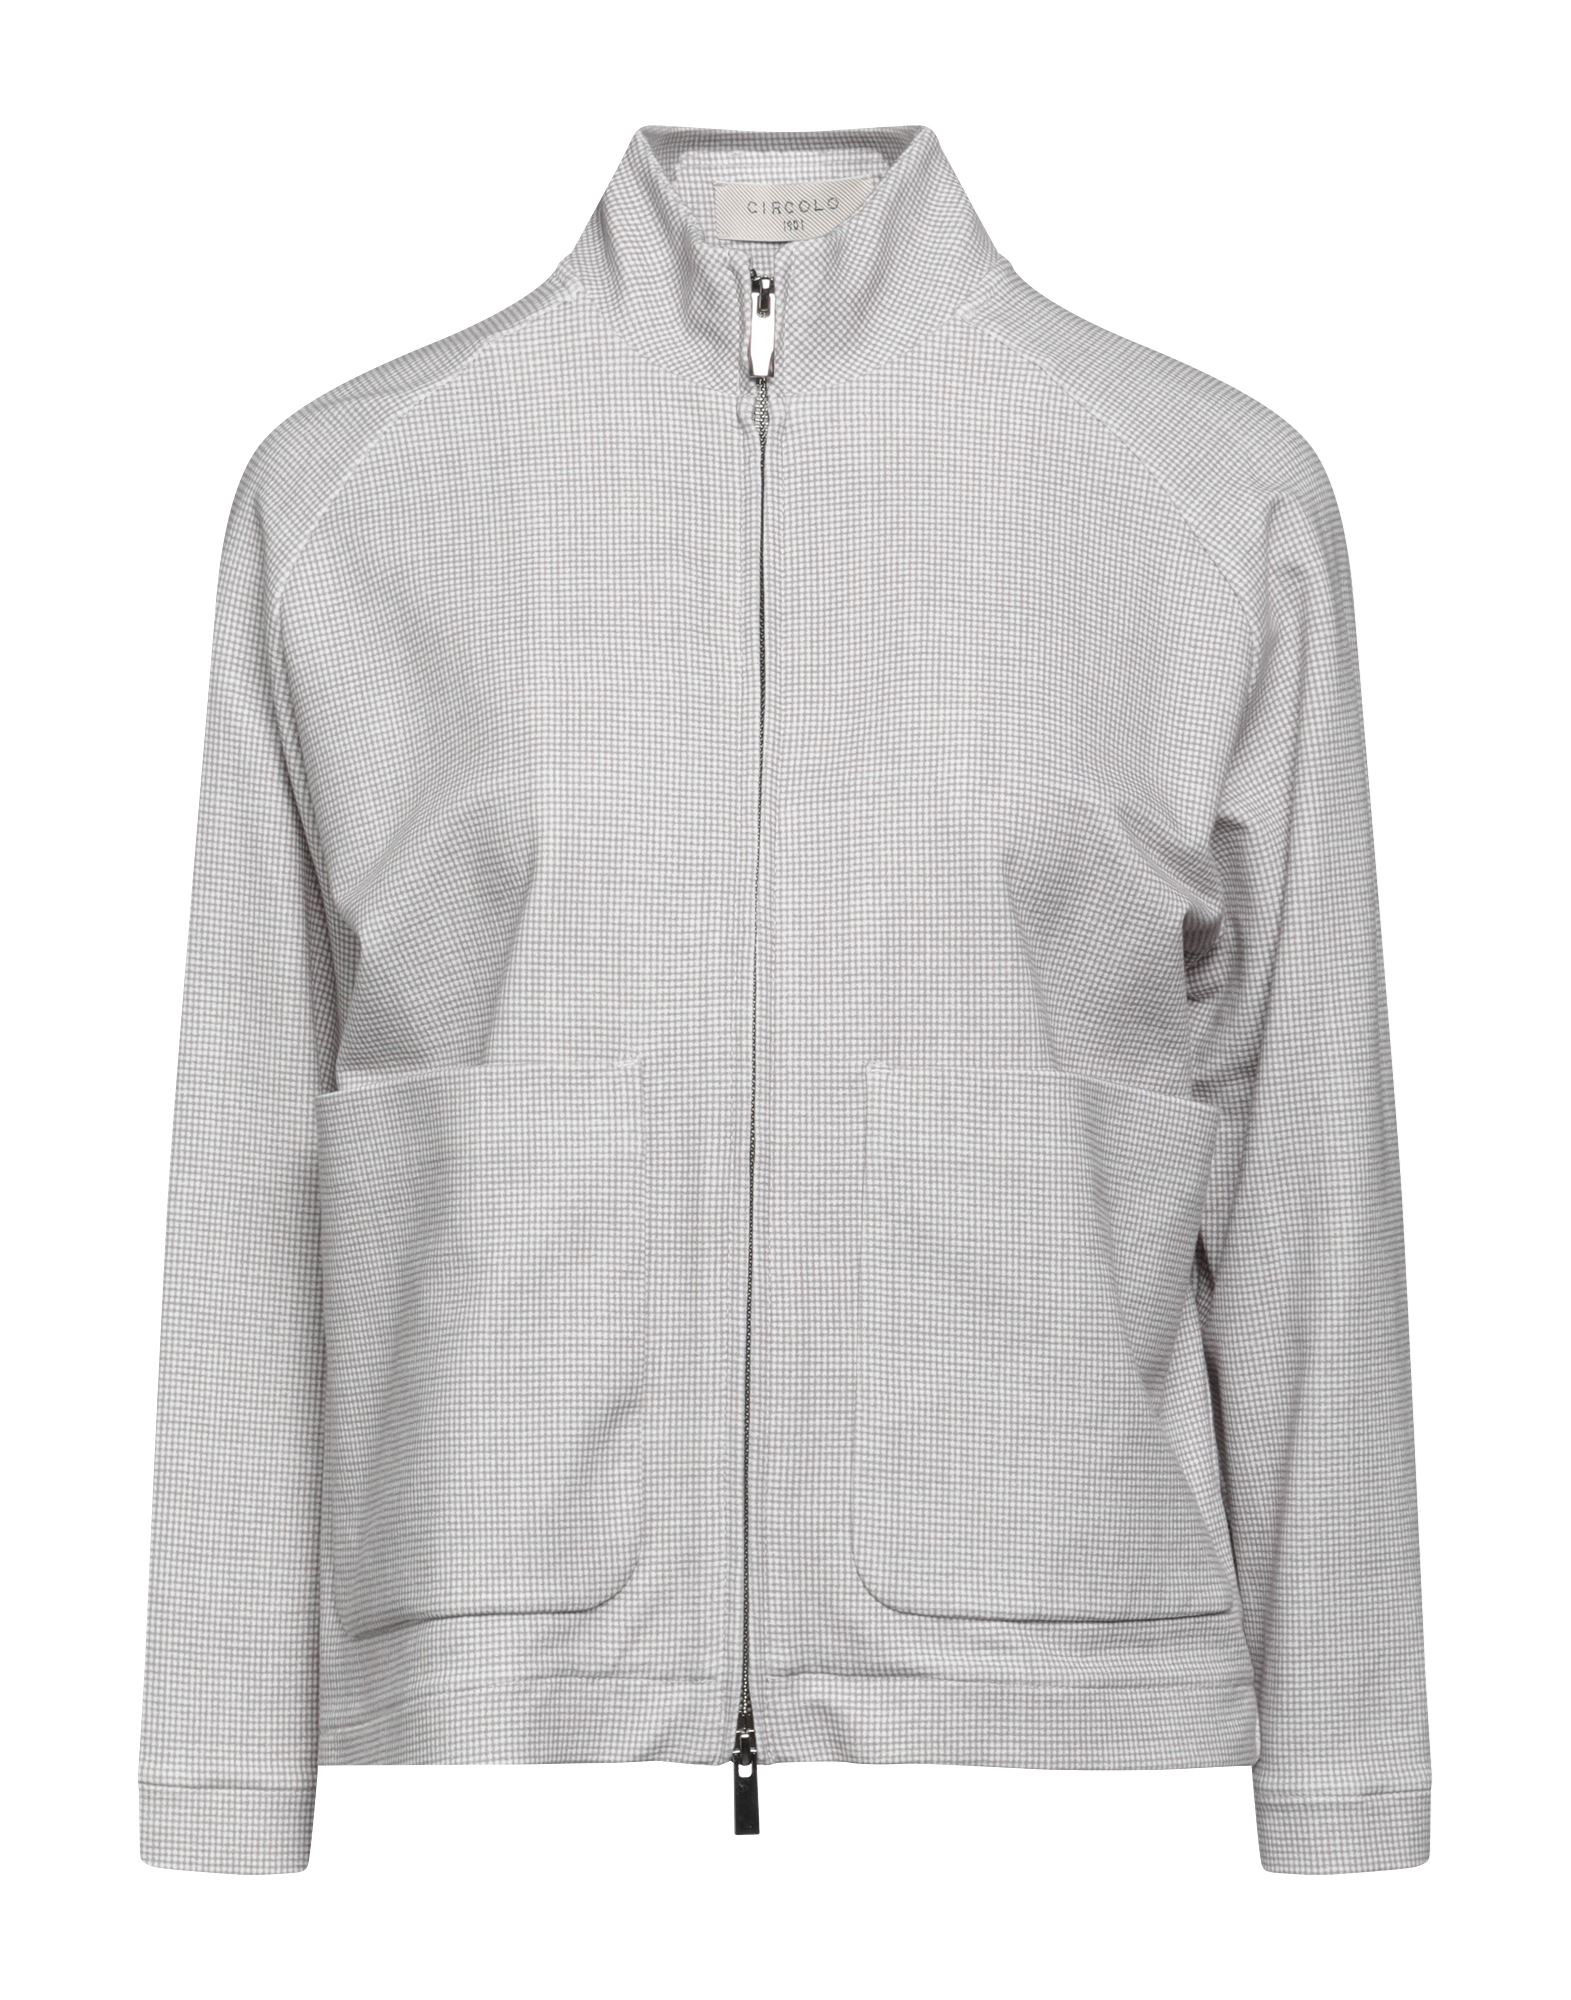 Circolo 1901 Jackets In Grey